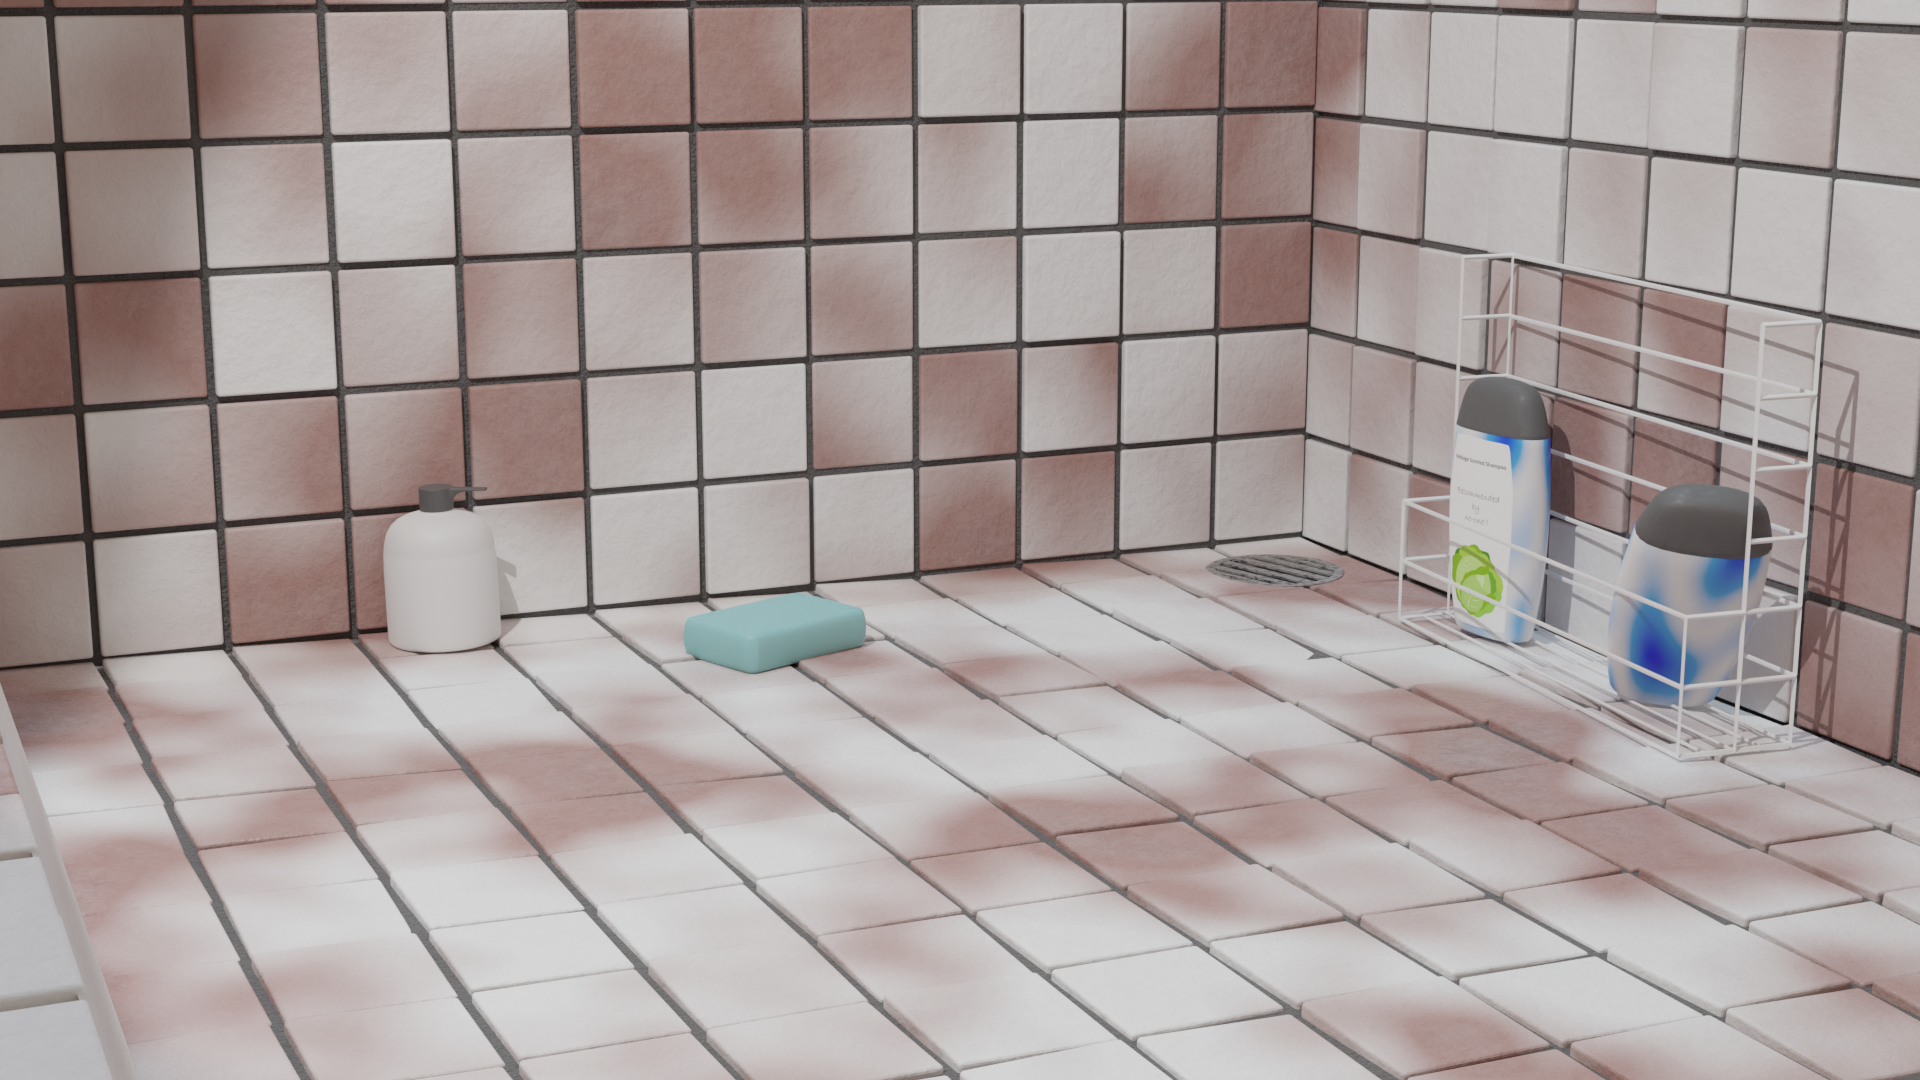 Bathroom scene inspired by my shower